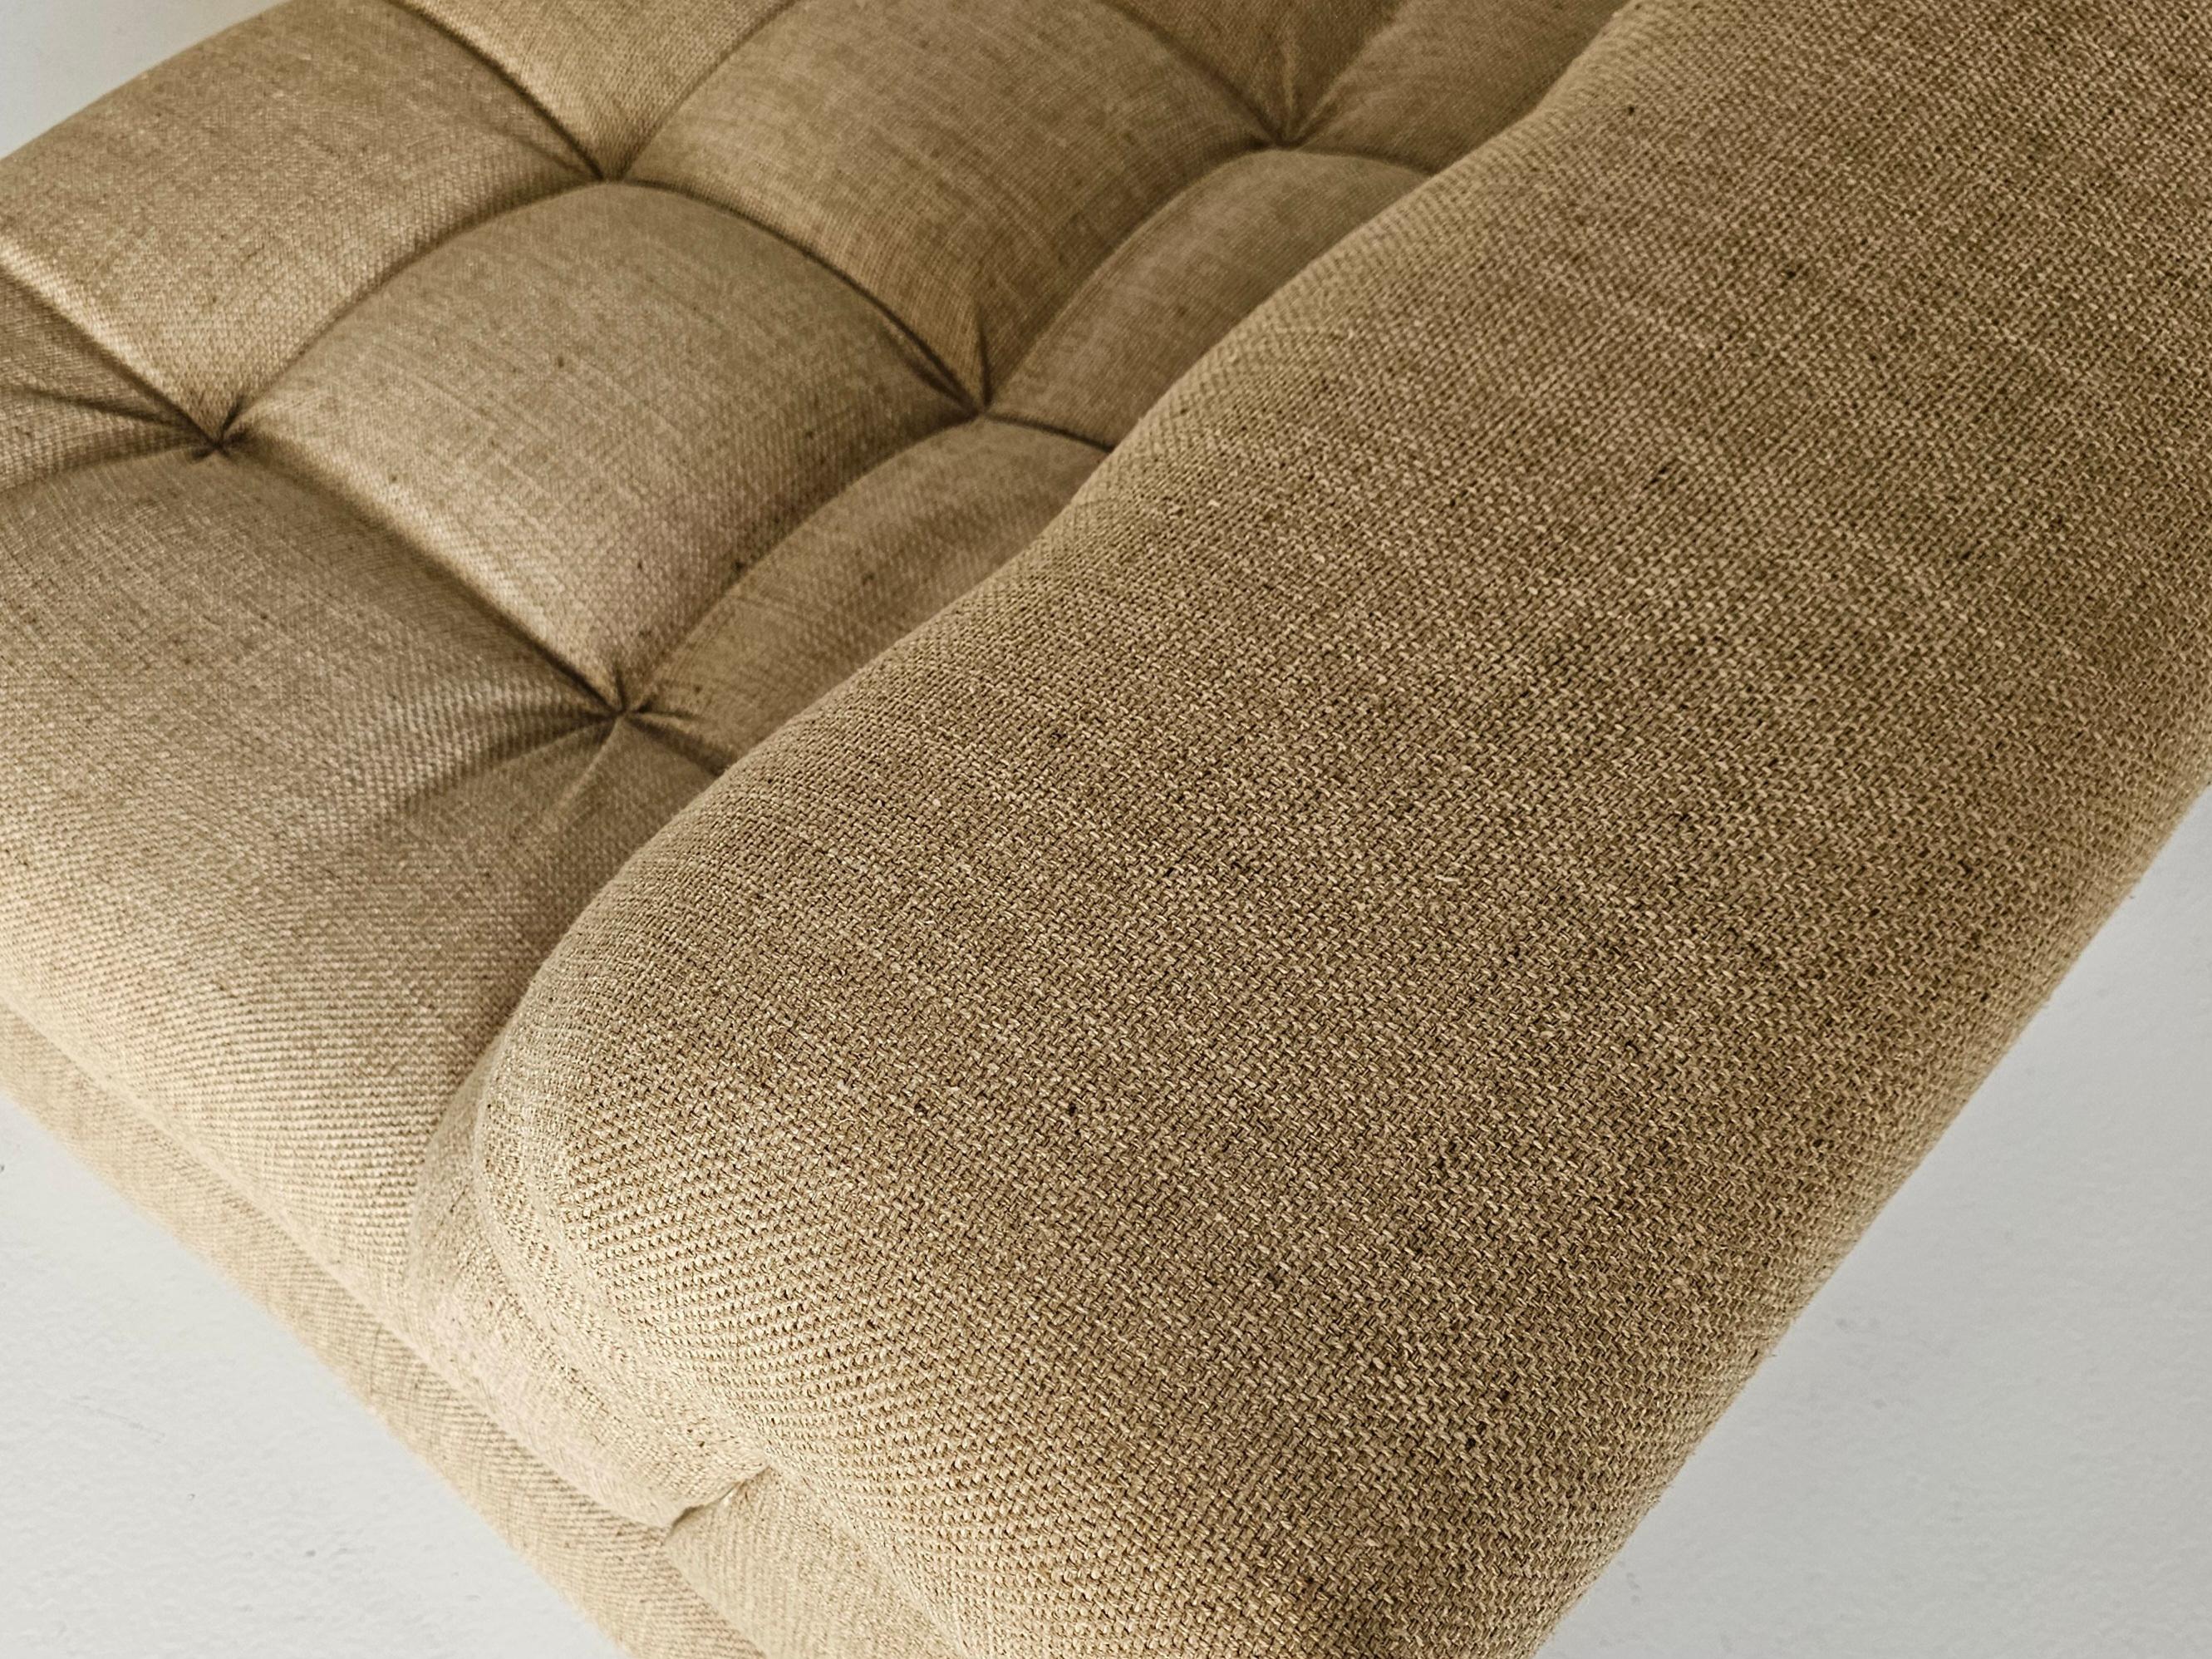 Mah Jong sofa in beige/sand fabric by Hans Hopfer, Roche Bobois, France, 1970s For Sale 4